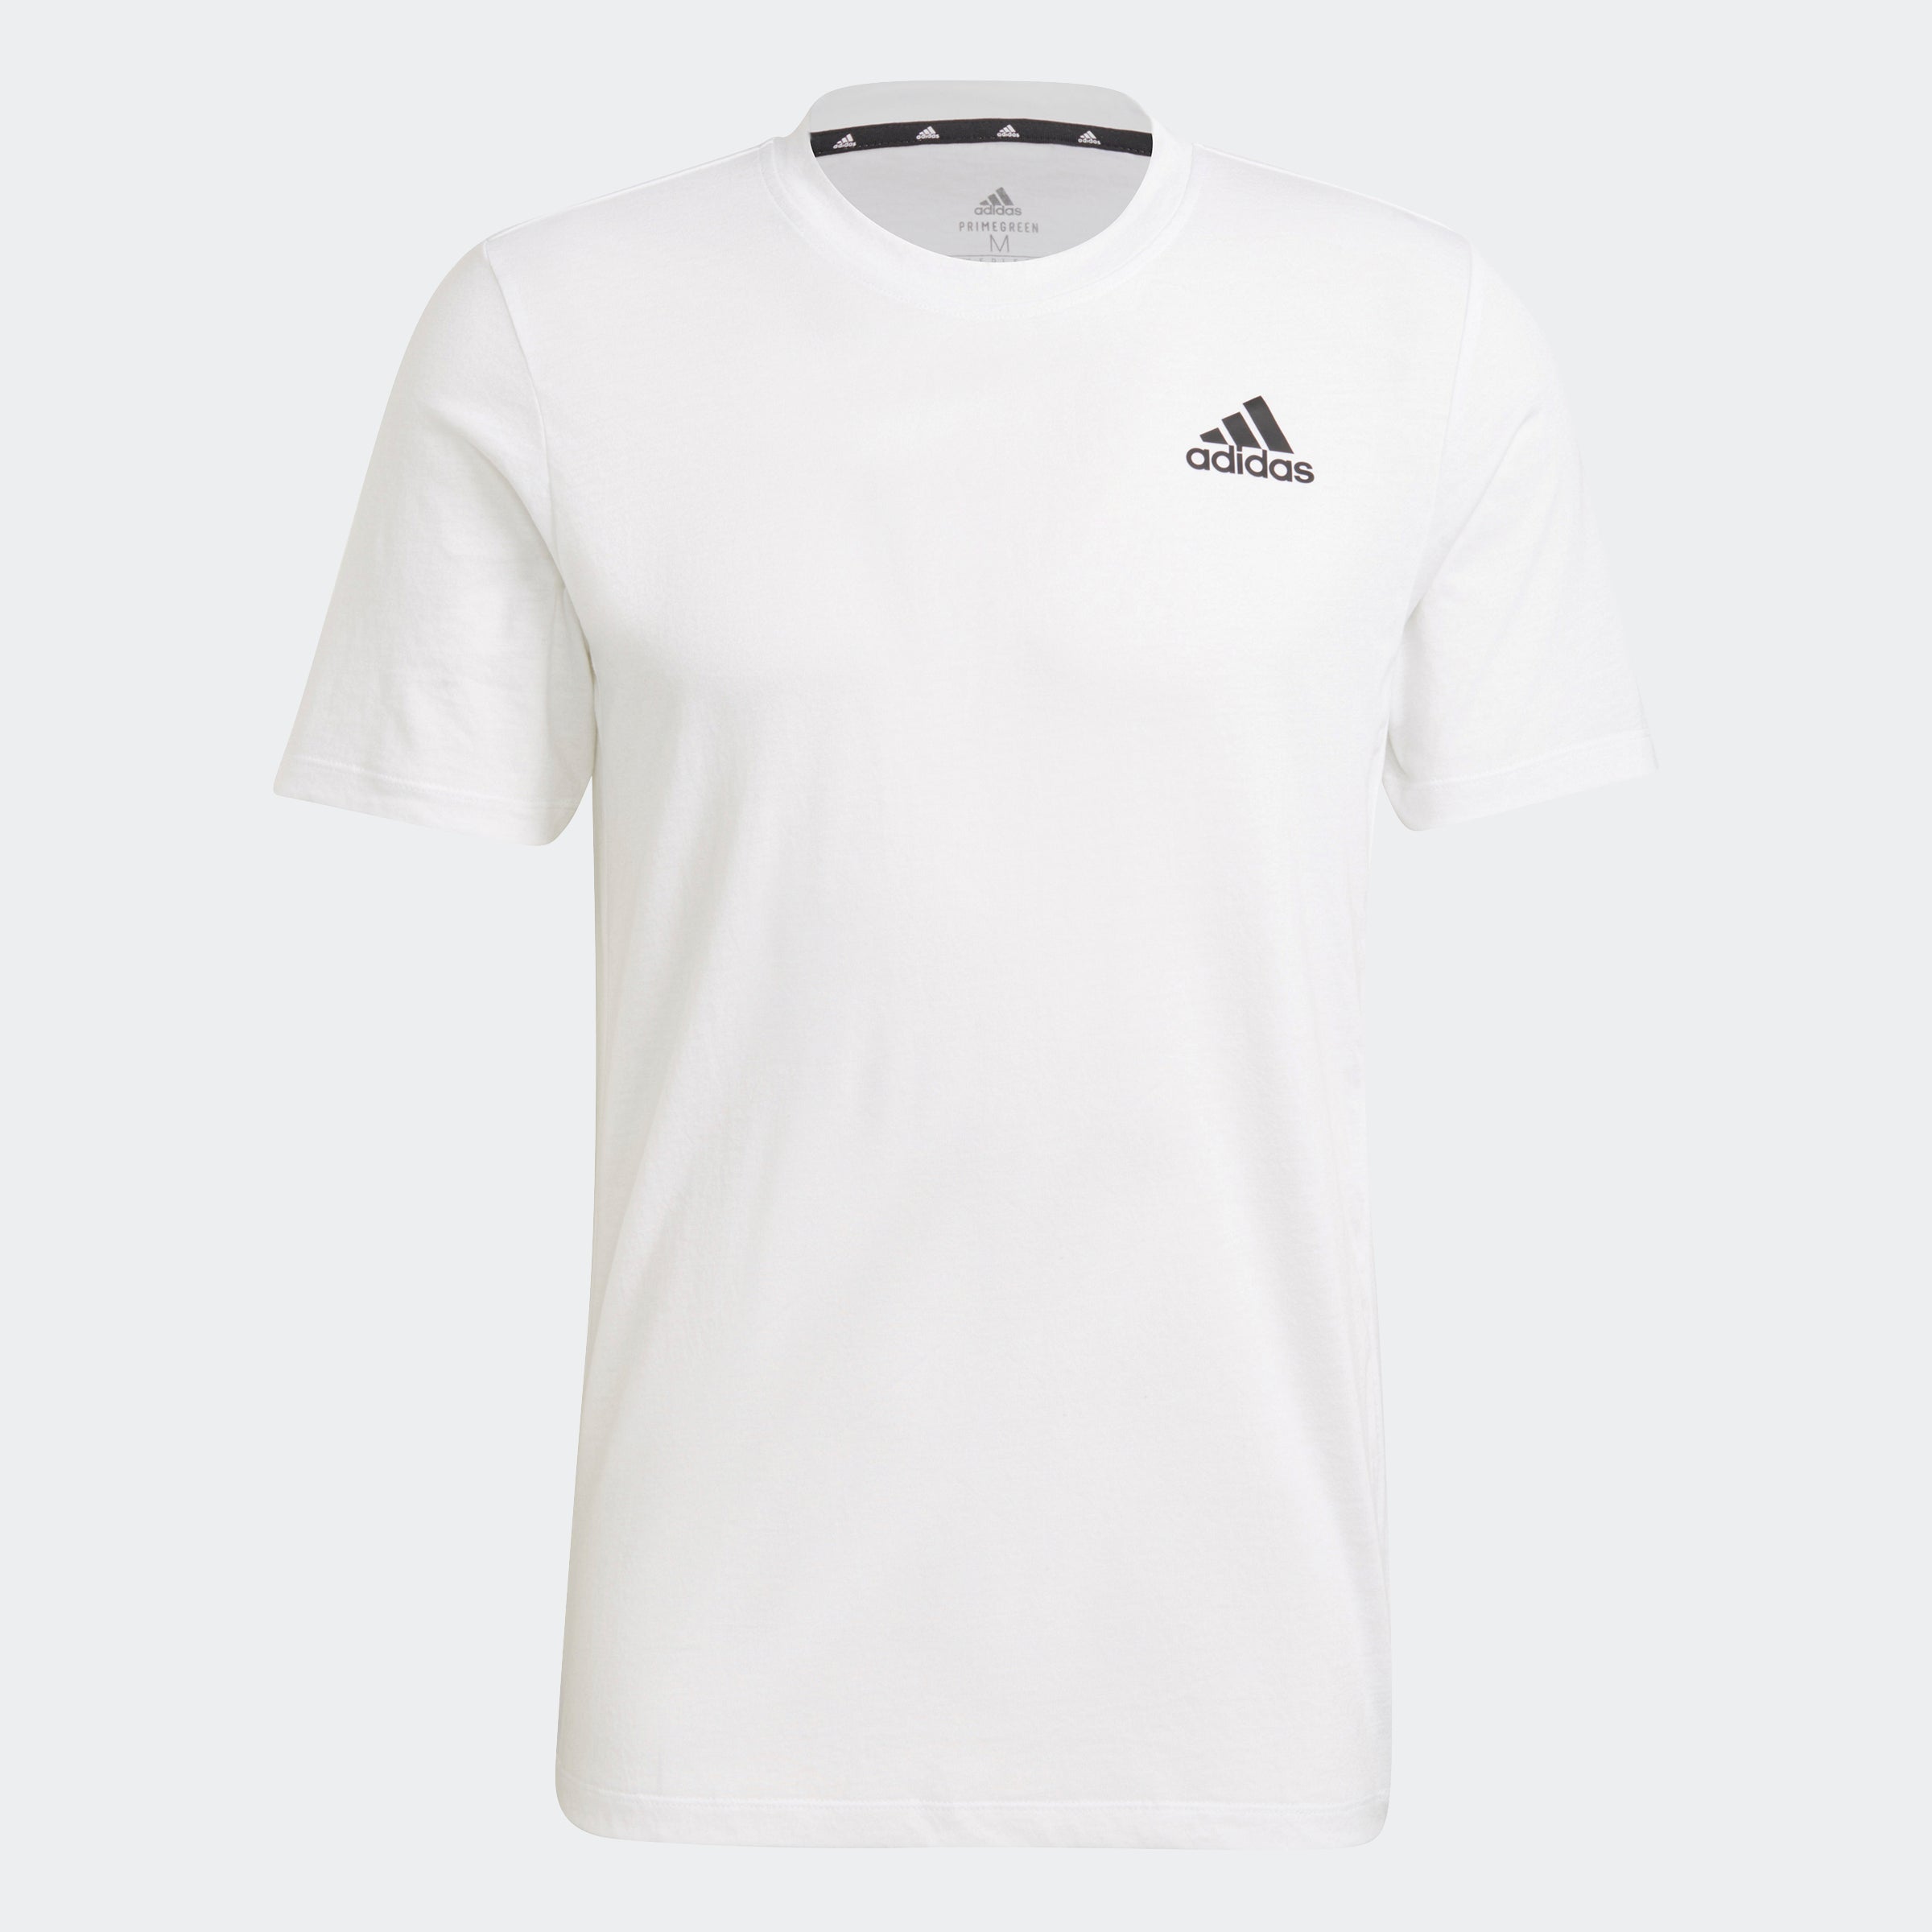 Adidas Men's Aeroready Designed to Move Sports Tee in White/Black